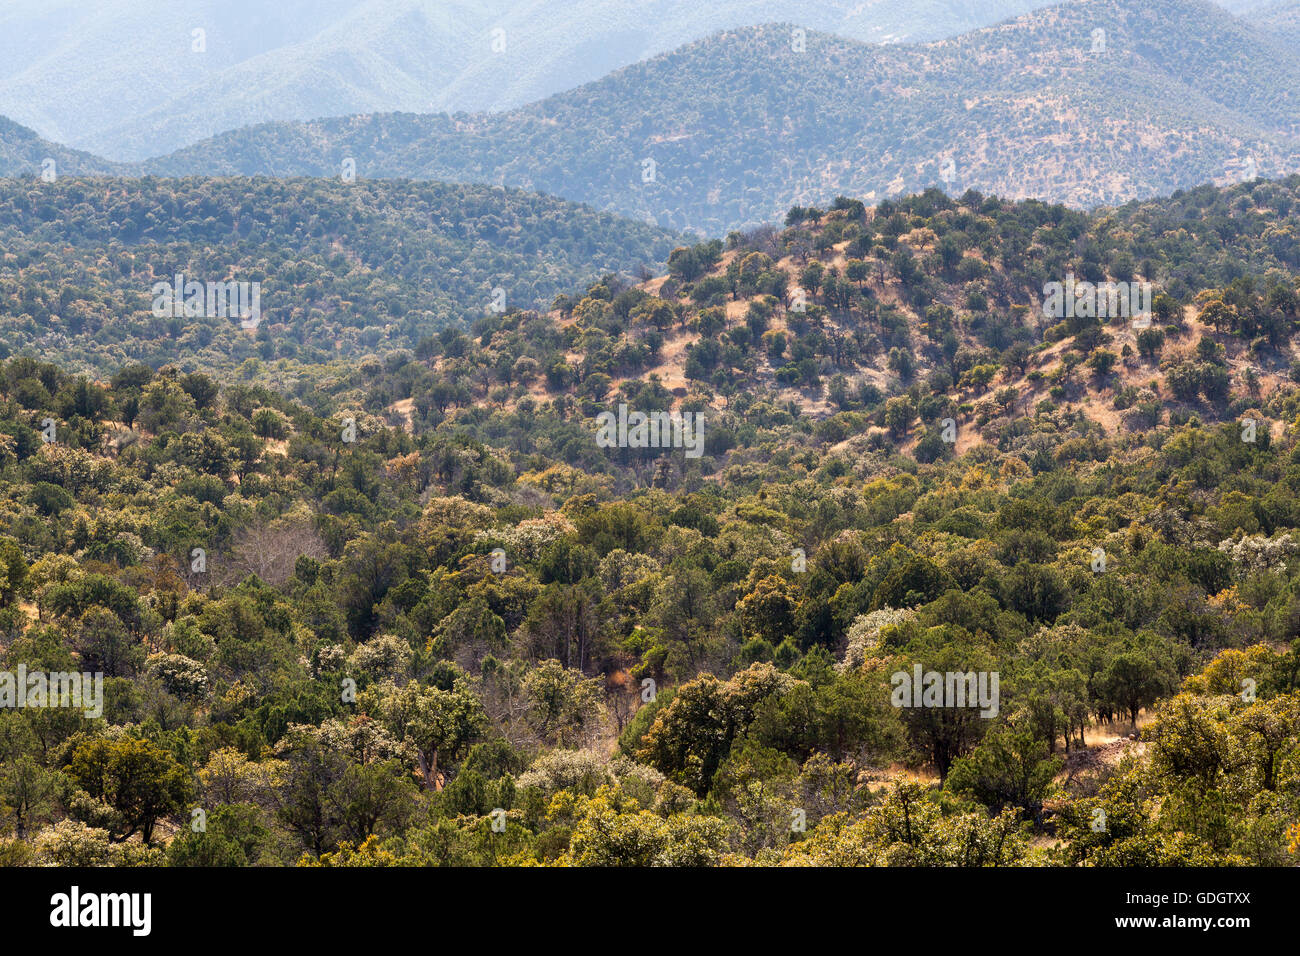 The foothills of the Santa Rita Mountains coated in oak, juniper, and pinyon pine trees. Coronado National Forest, Arizona Stock Photo